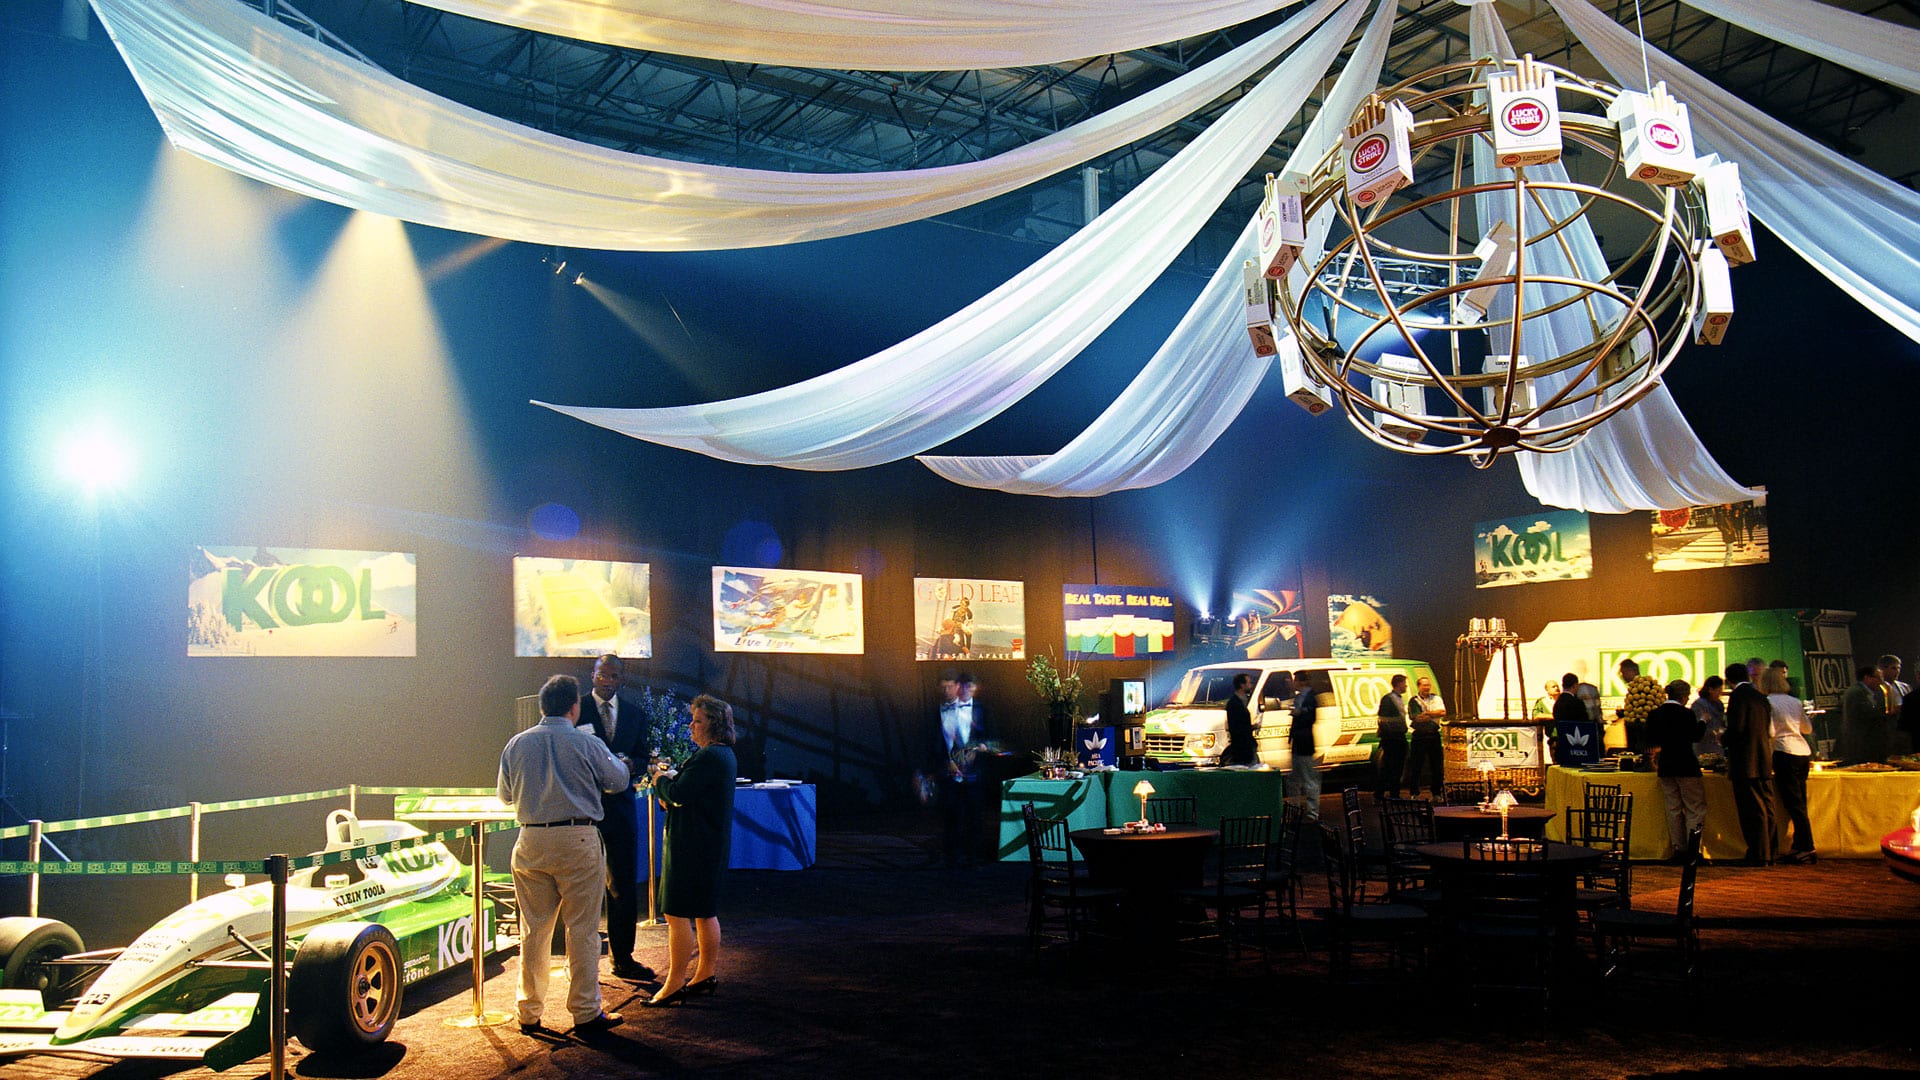 Exhibits Displays Environments-Volo Events